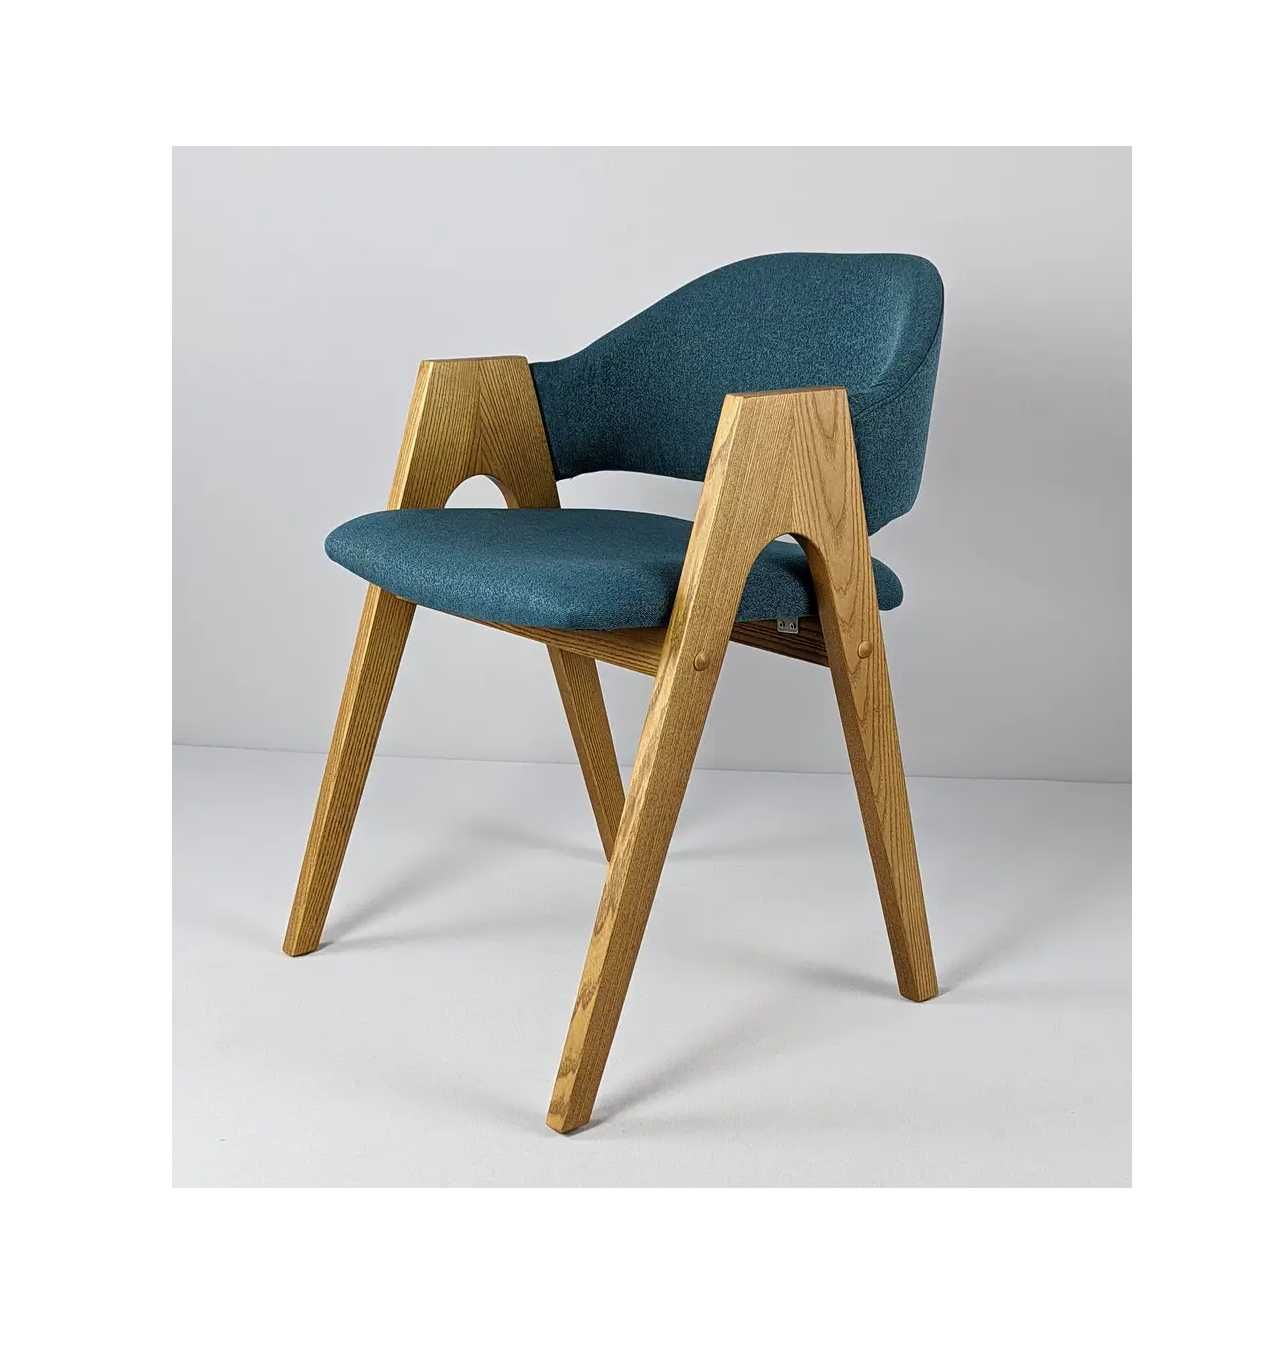 Дизайнерский стул. Стул из дерева. Мягкий стул. Стул Джим